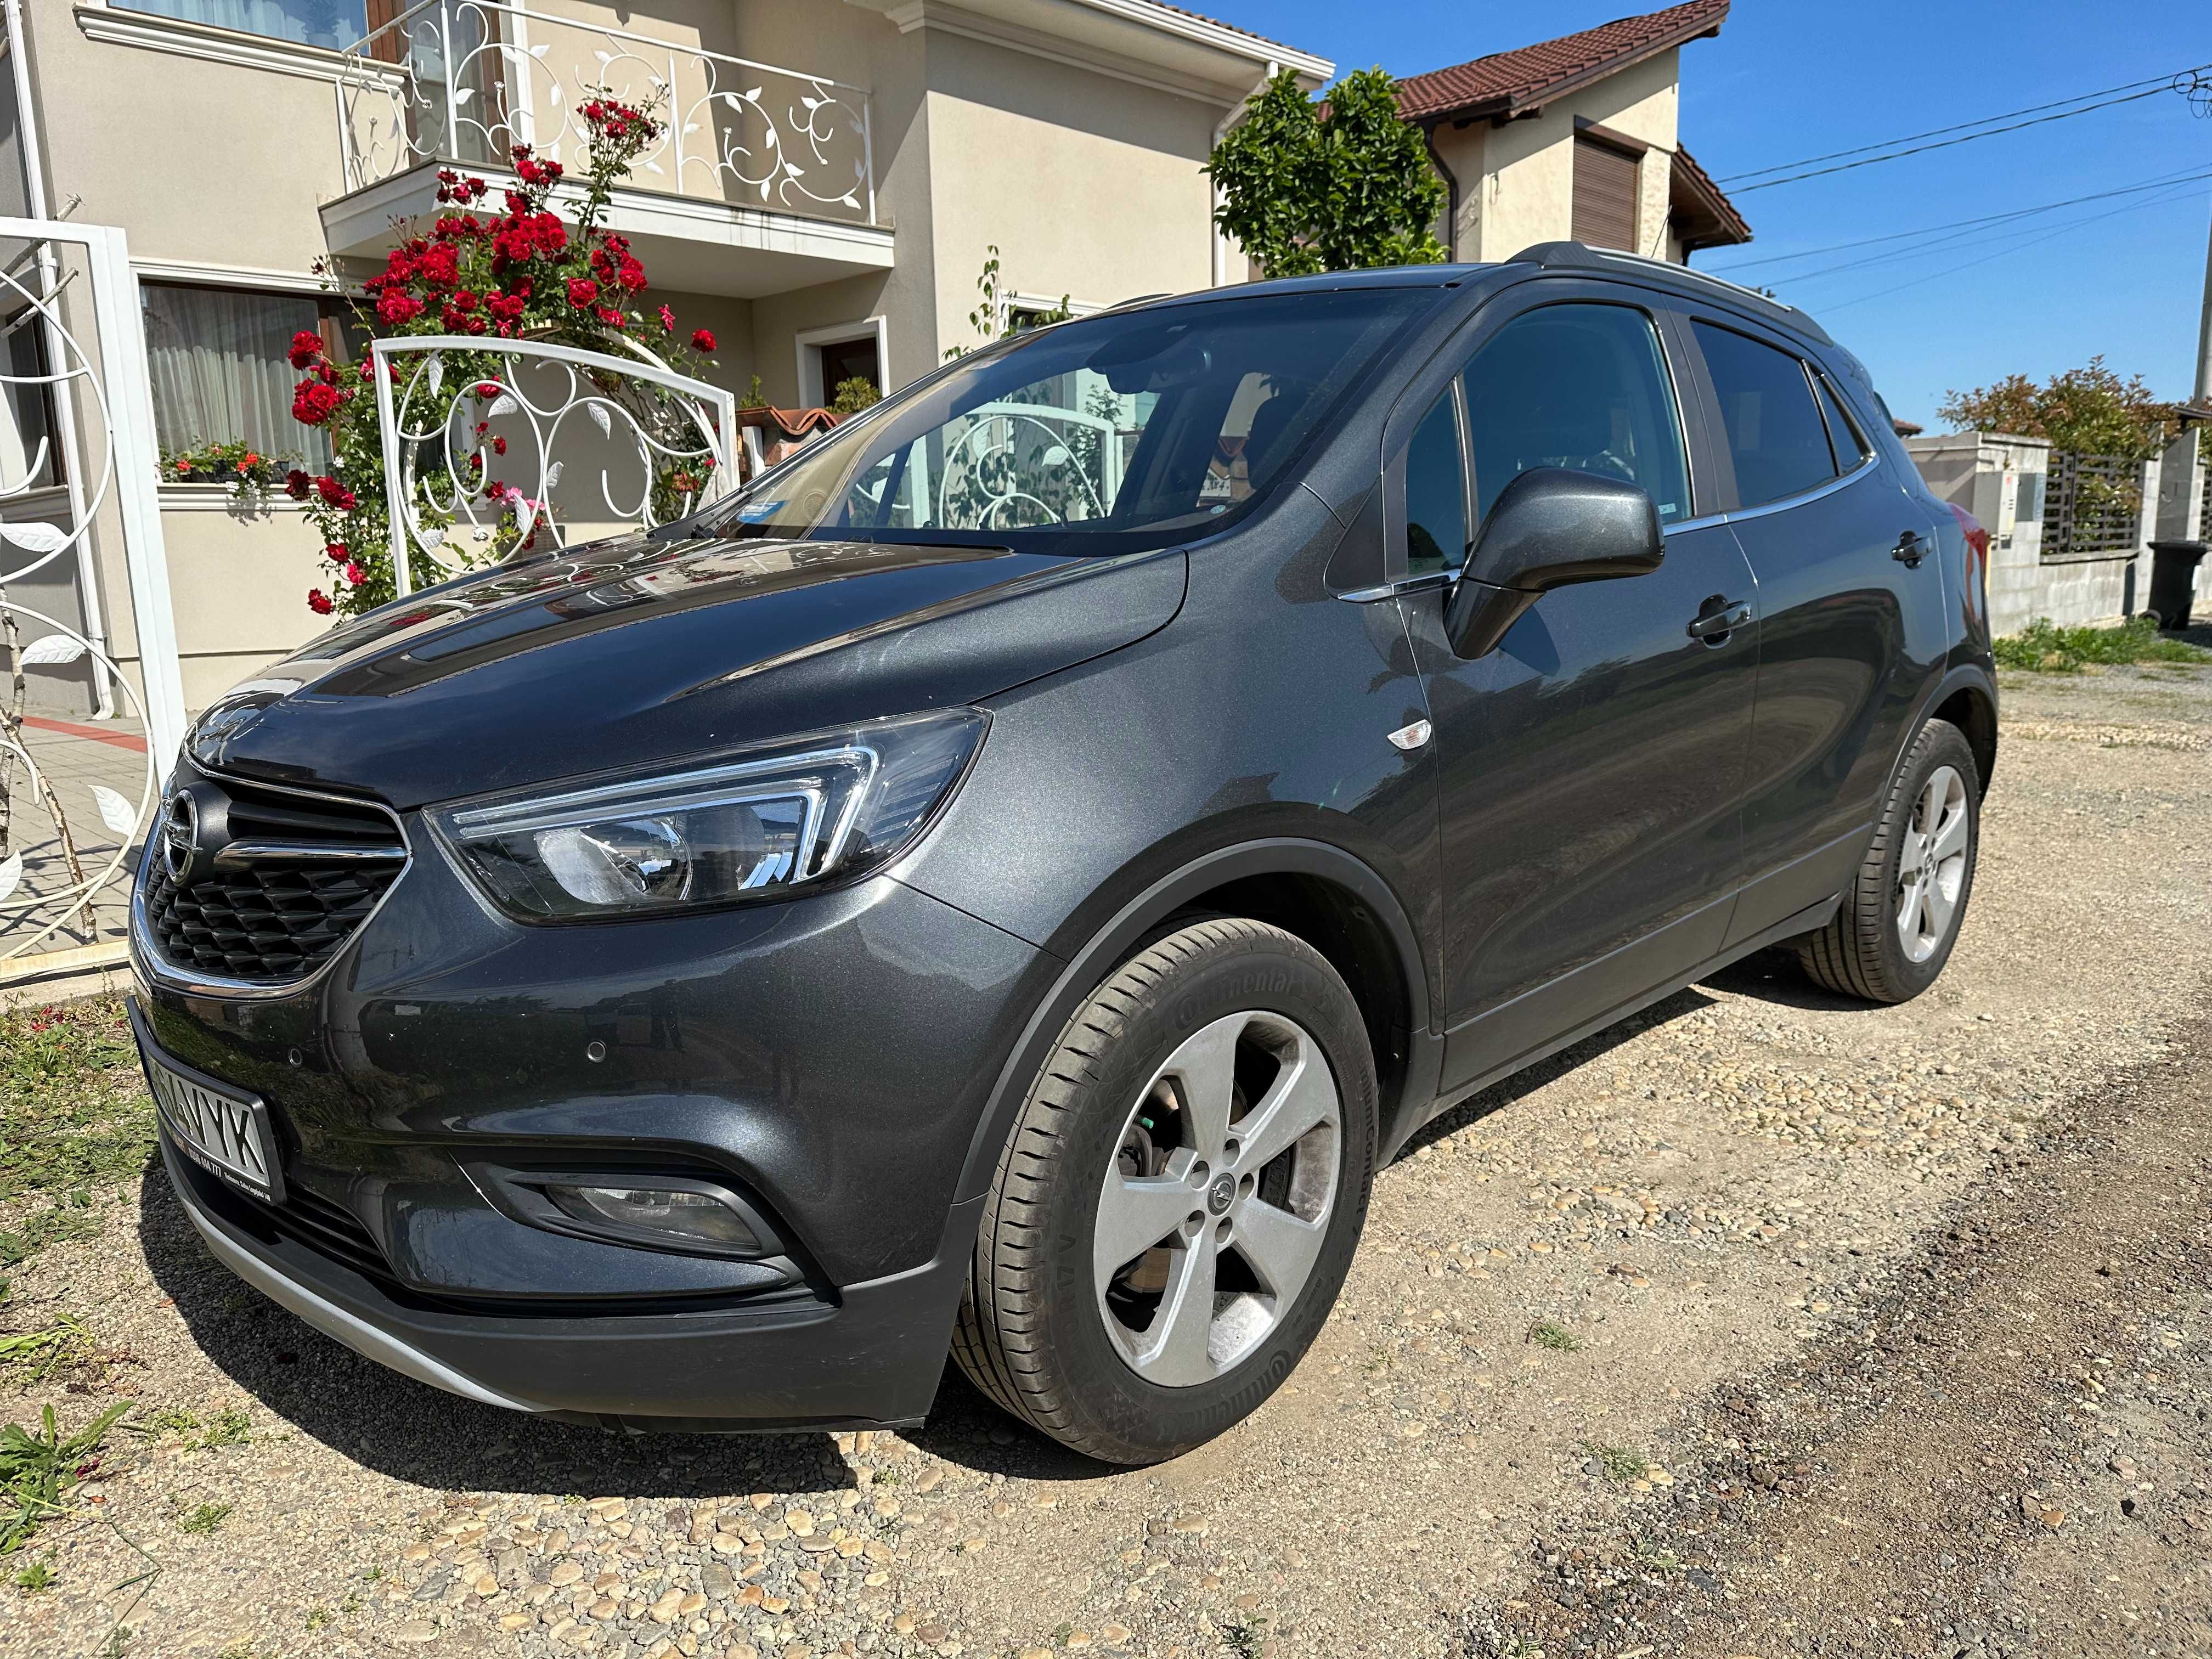 Opel Mokka X 2017, 136cp manuala, 133000 km, fara accident